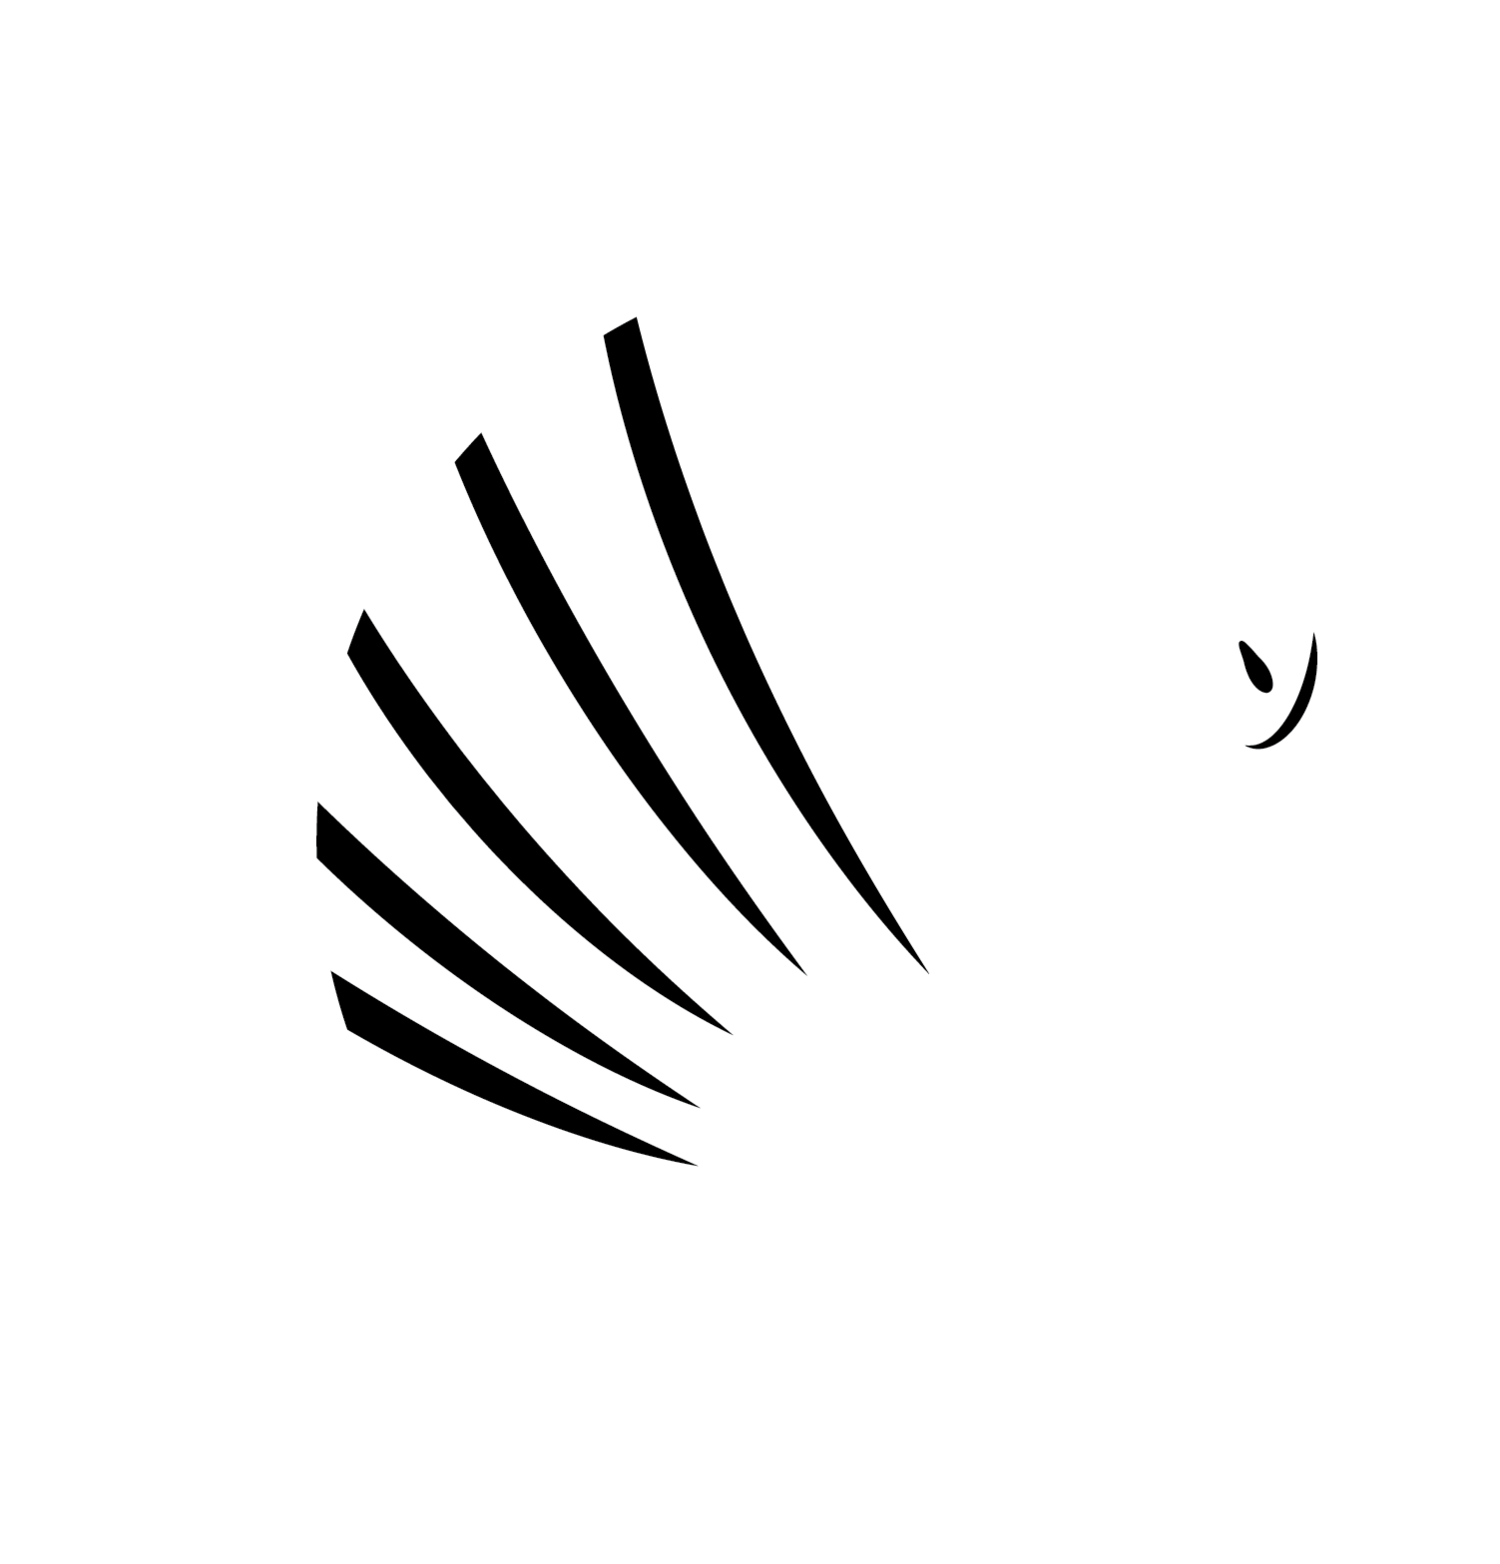 Menu — The White Swan